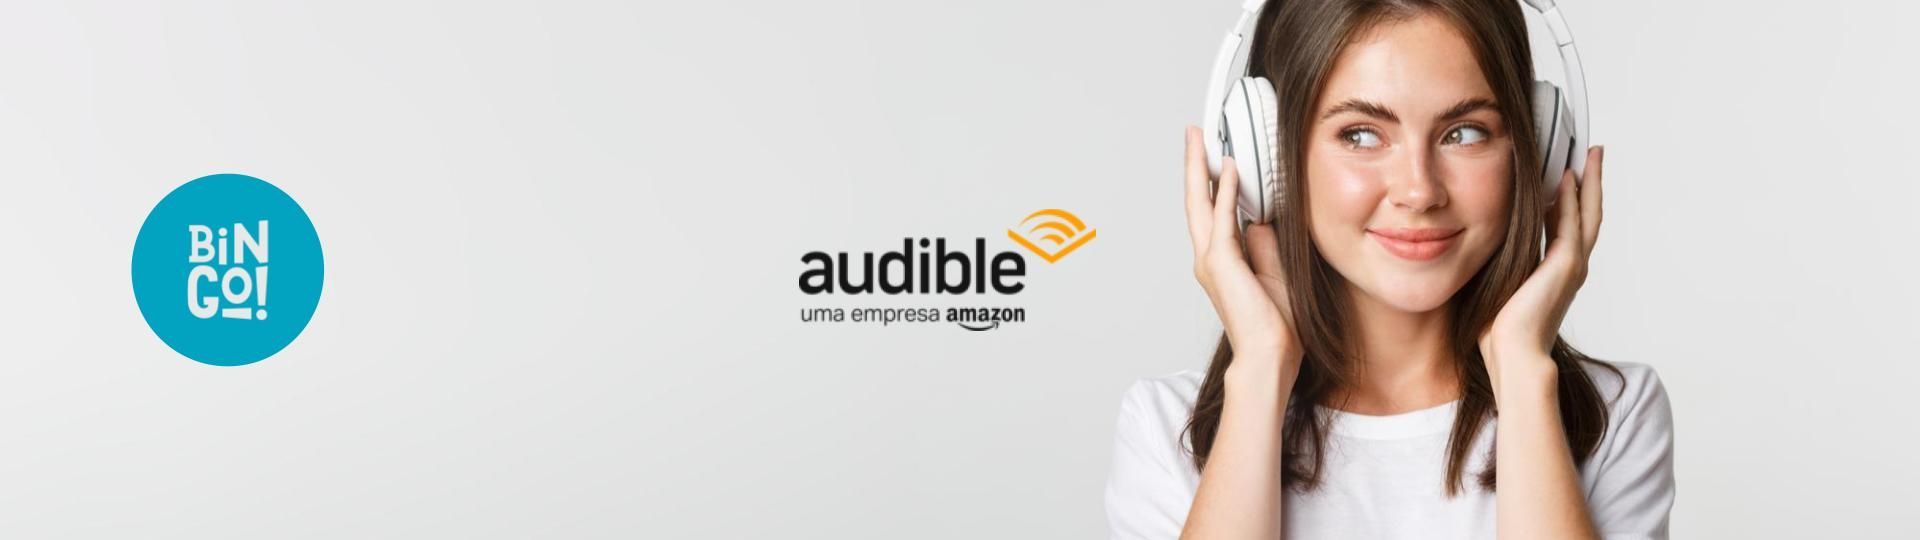 audible-audiobooks-da-amazon-agora-no-brasil